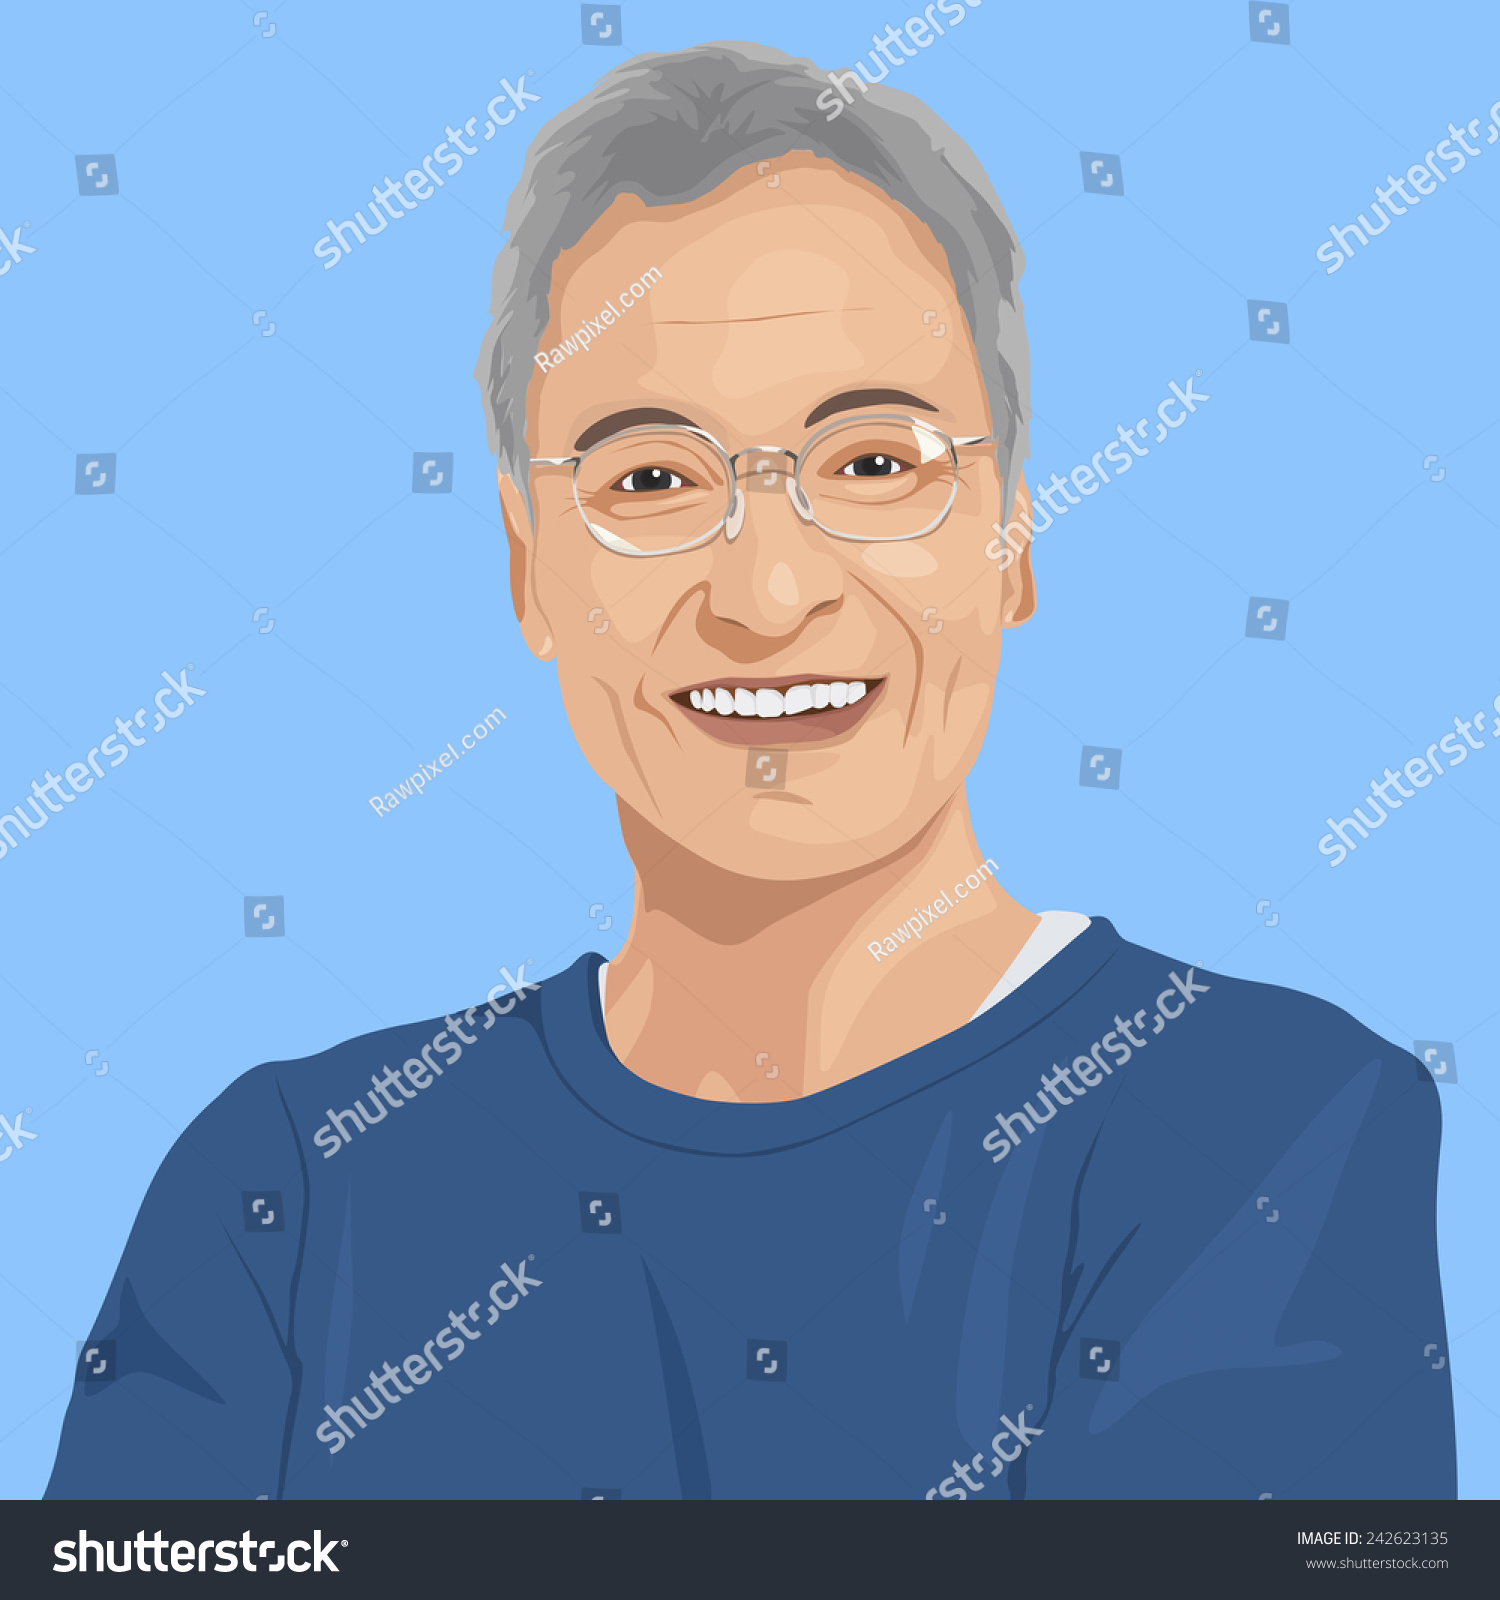 Portrait of Senior Adult Vector #242623135